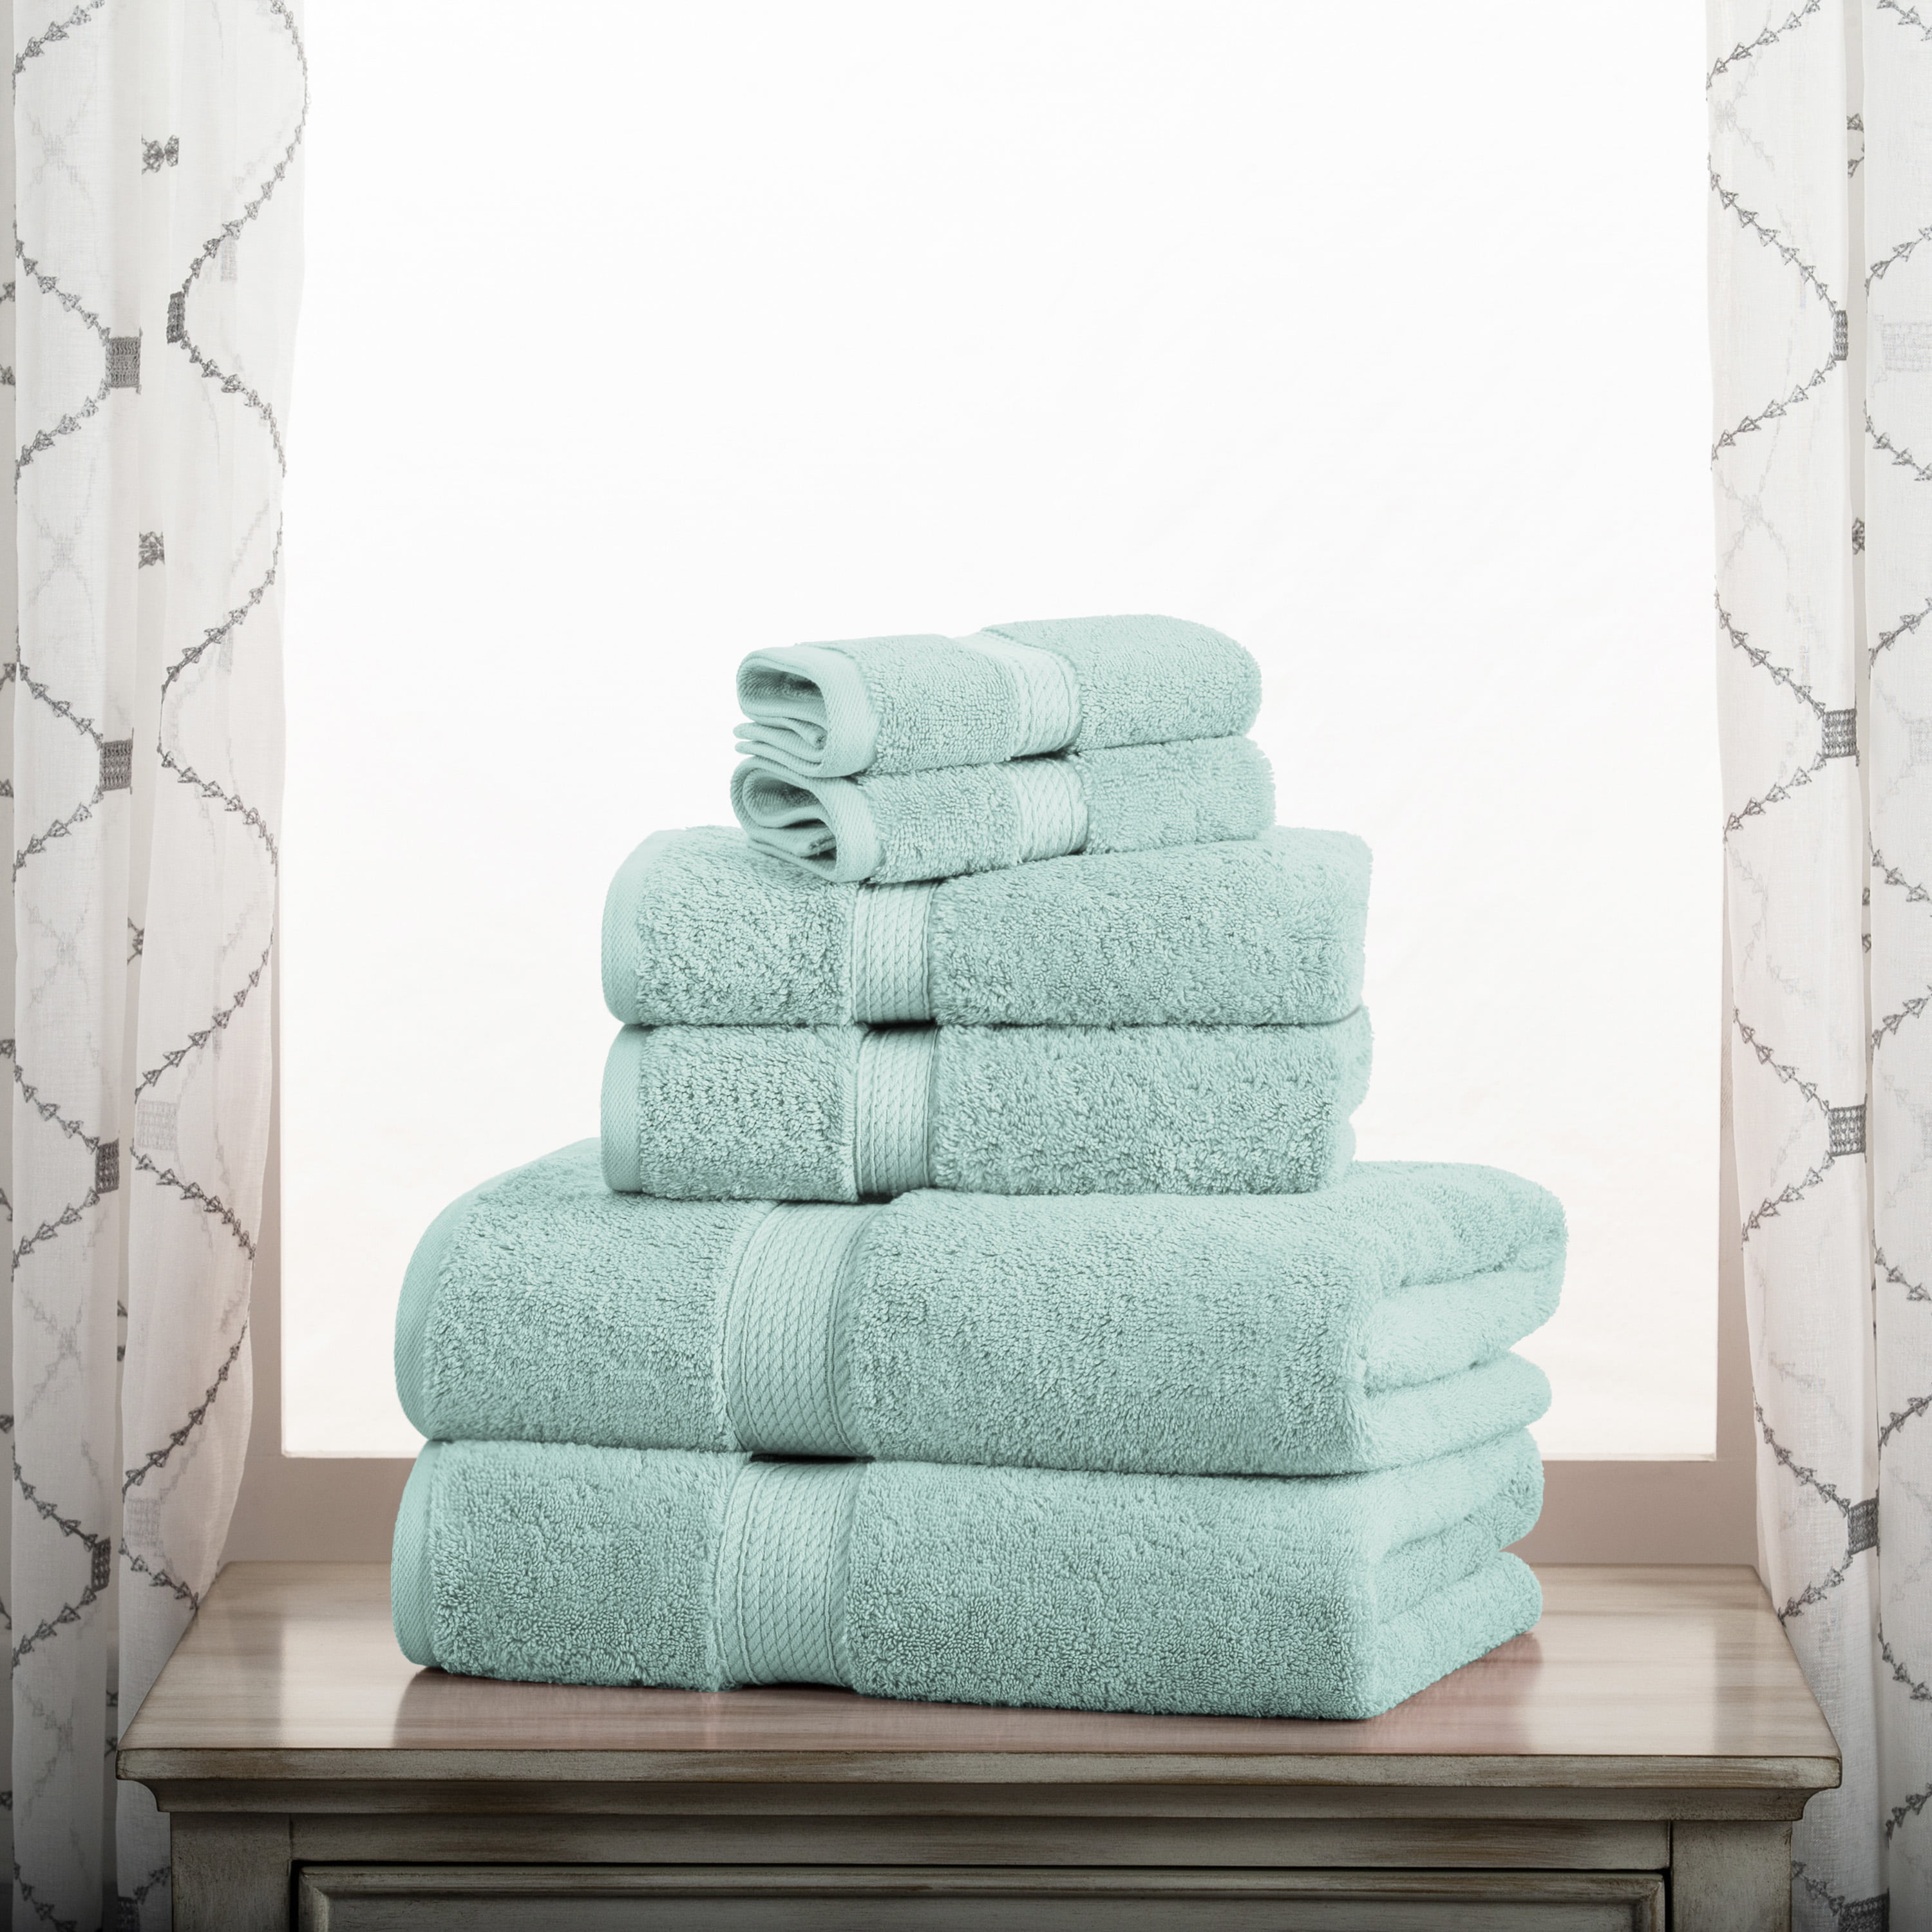 12-pc Superior Egyptian Cotton Towel Set 4 Bath 4 Hand 4 Face Towels Sea Foam 